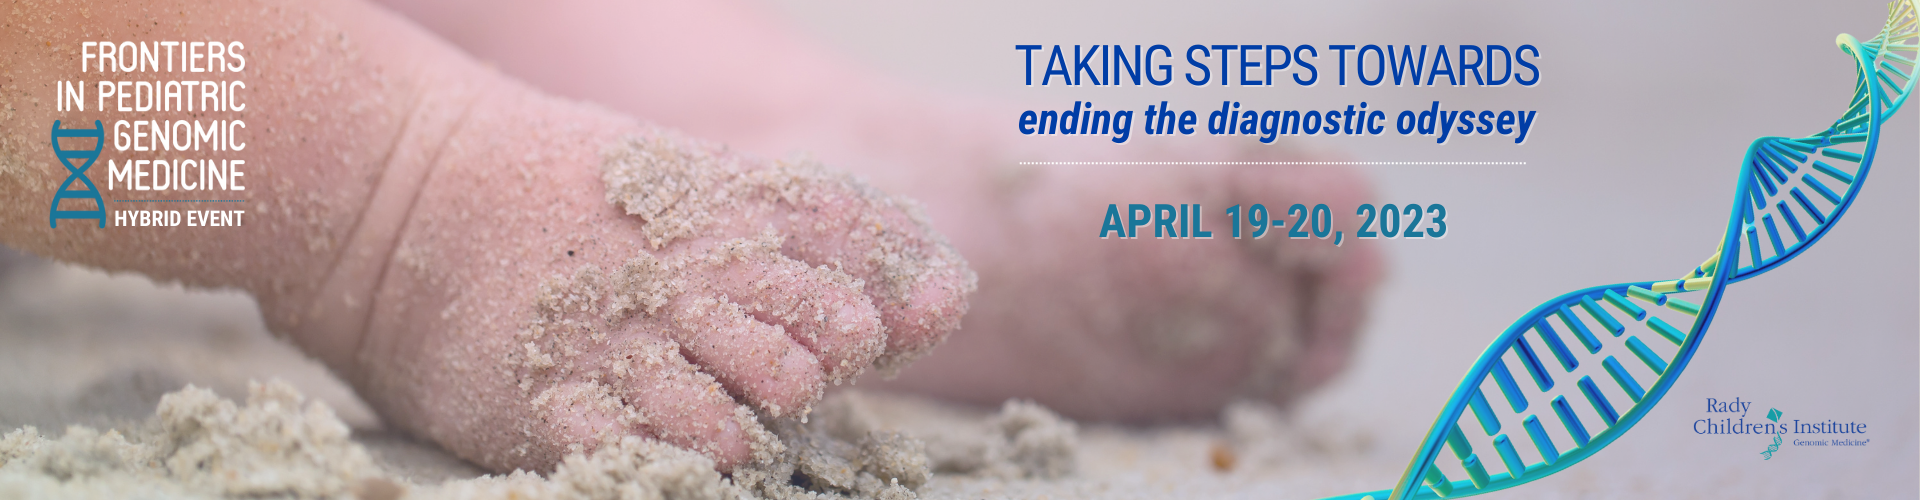 Taking Steps Towards Ending the Diagnostic Odyssey | April 19-20, 2023